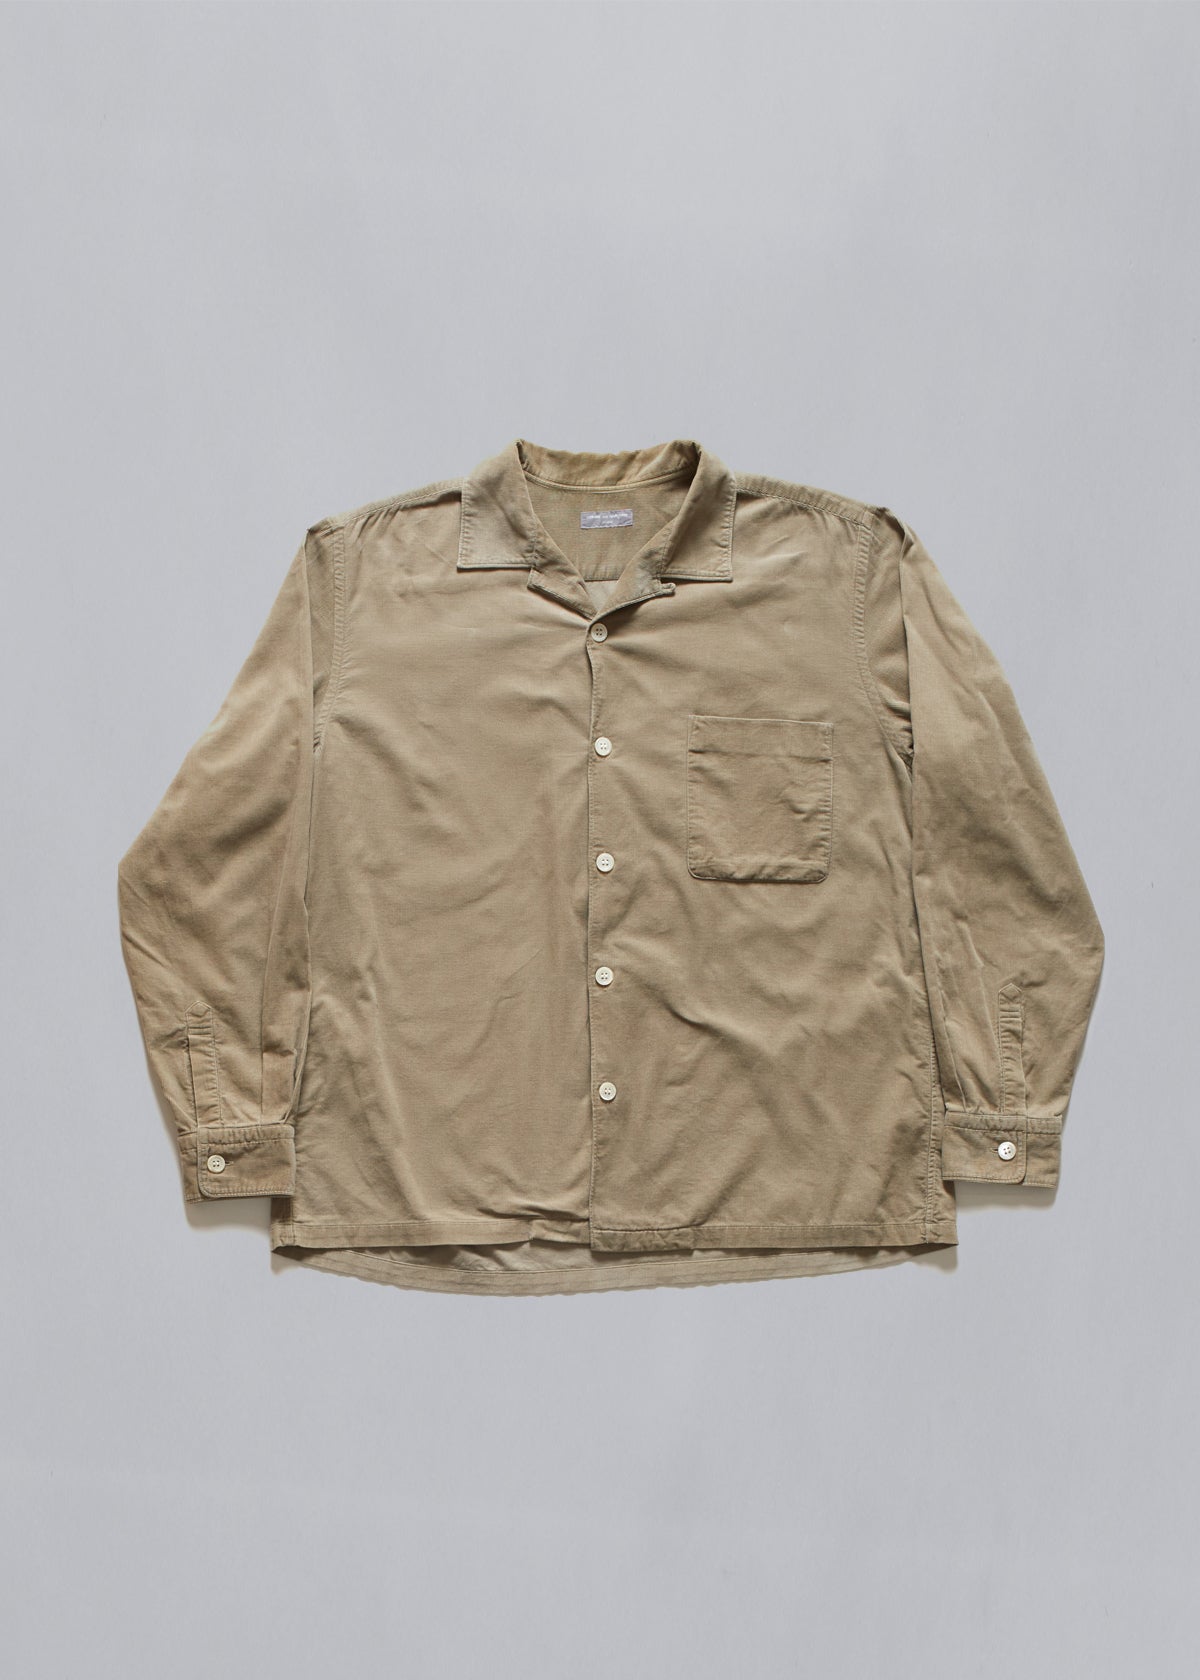 Homme Corduroy Shirt 2000 - Large - The Archivist Store